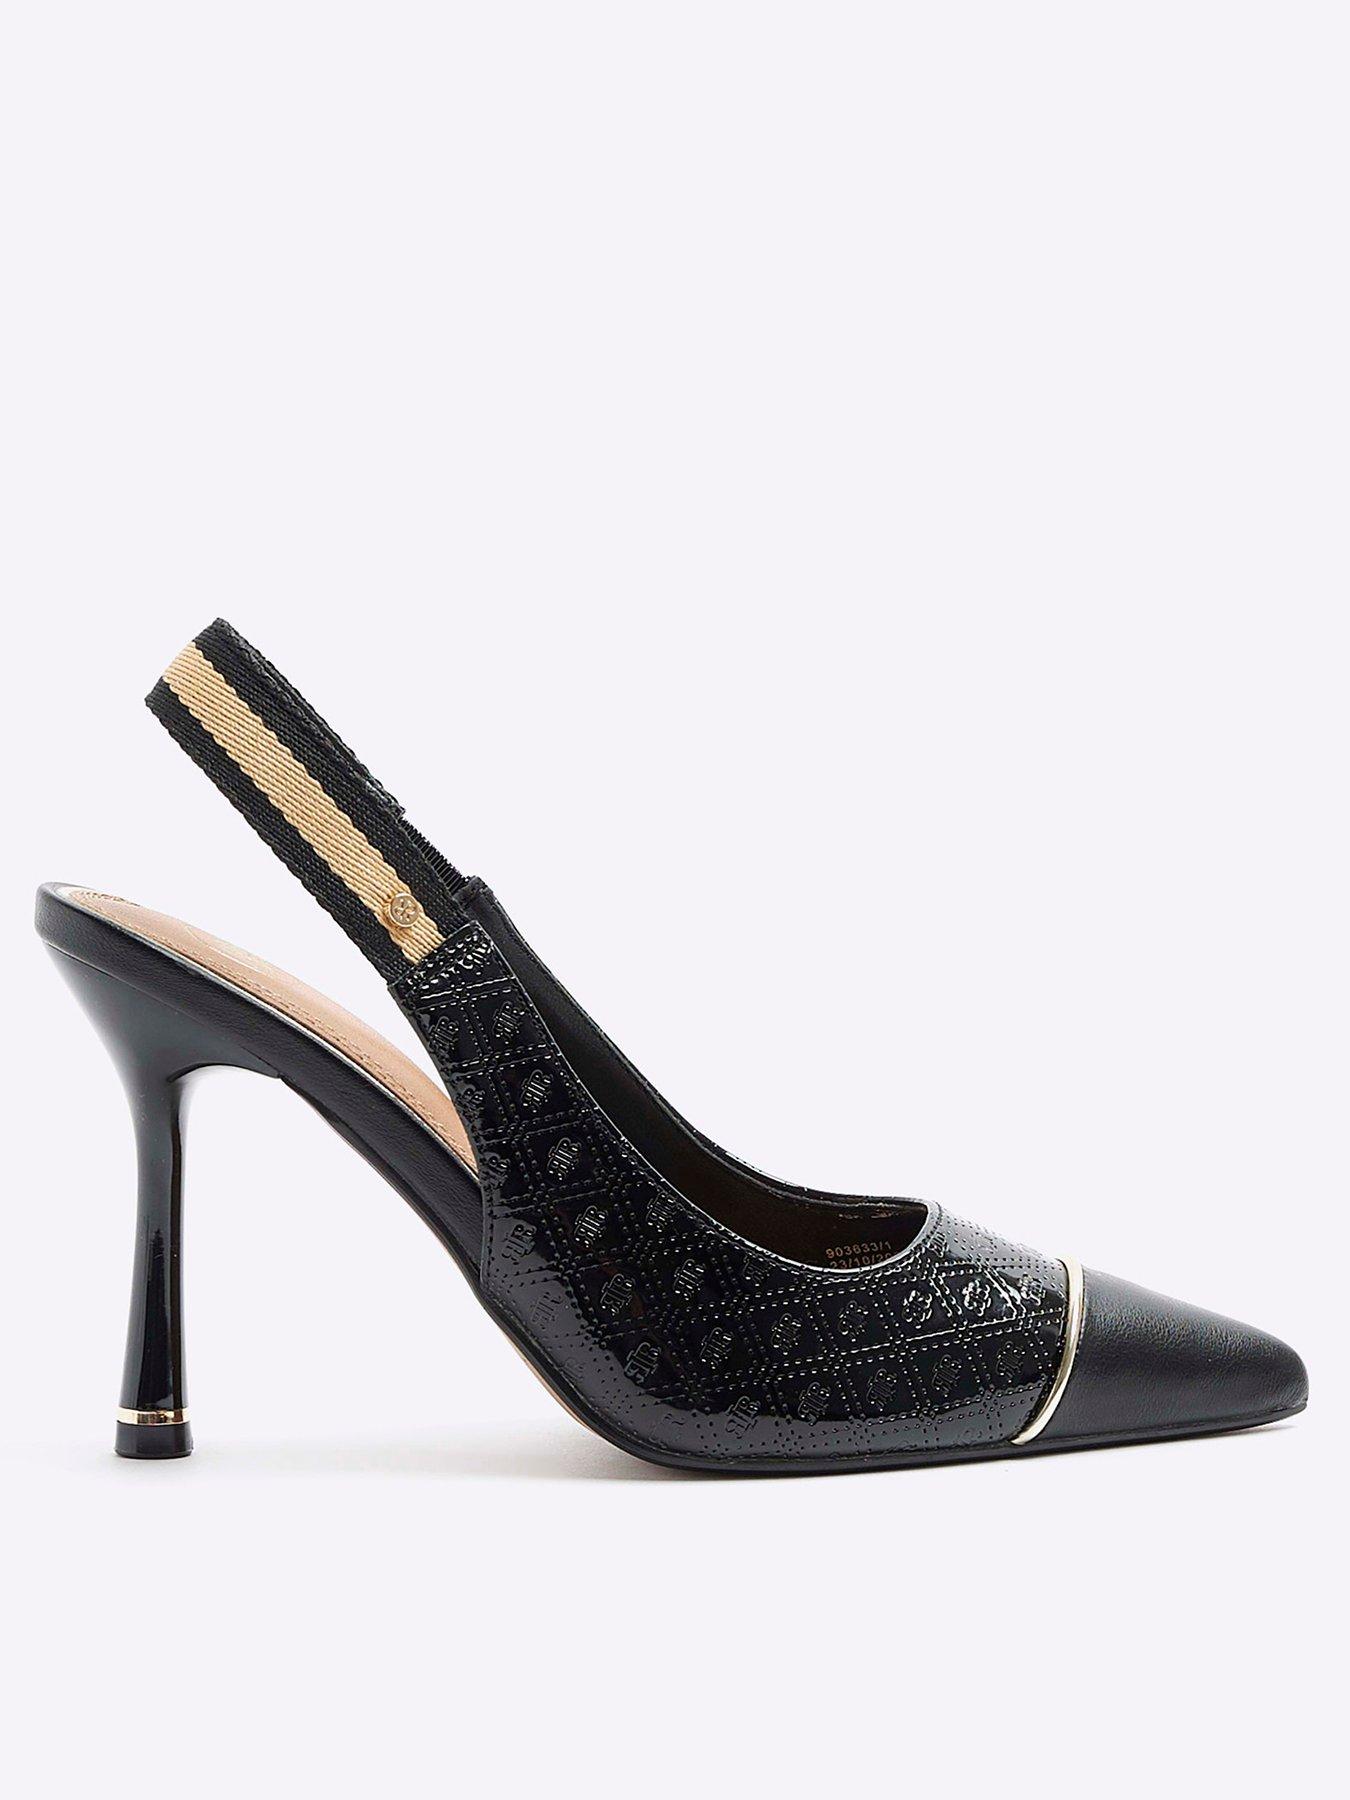 4 Inch Heel Black Pu Wide Width Drag Queen Shoes | DREAM-420W – Shoecup.com